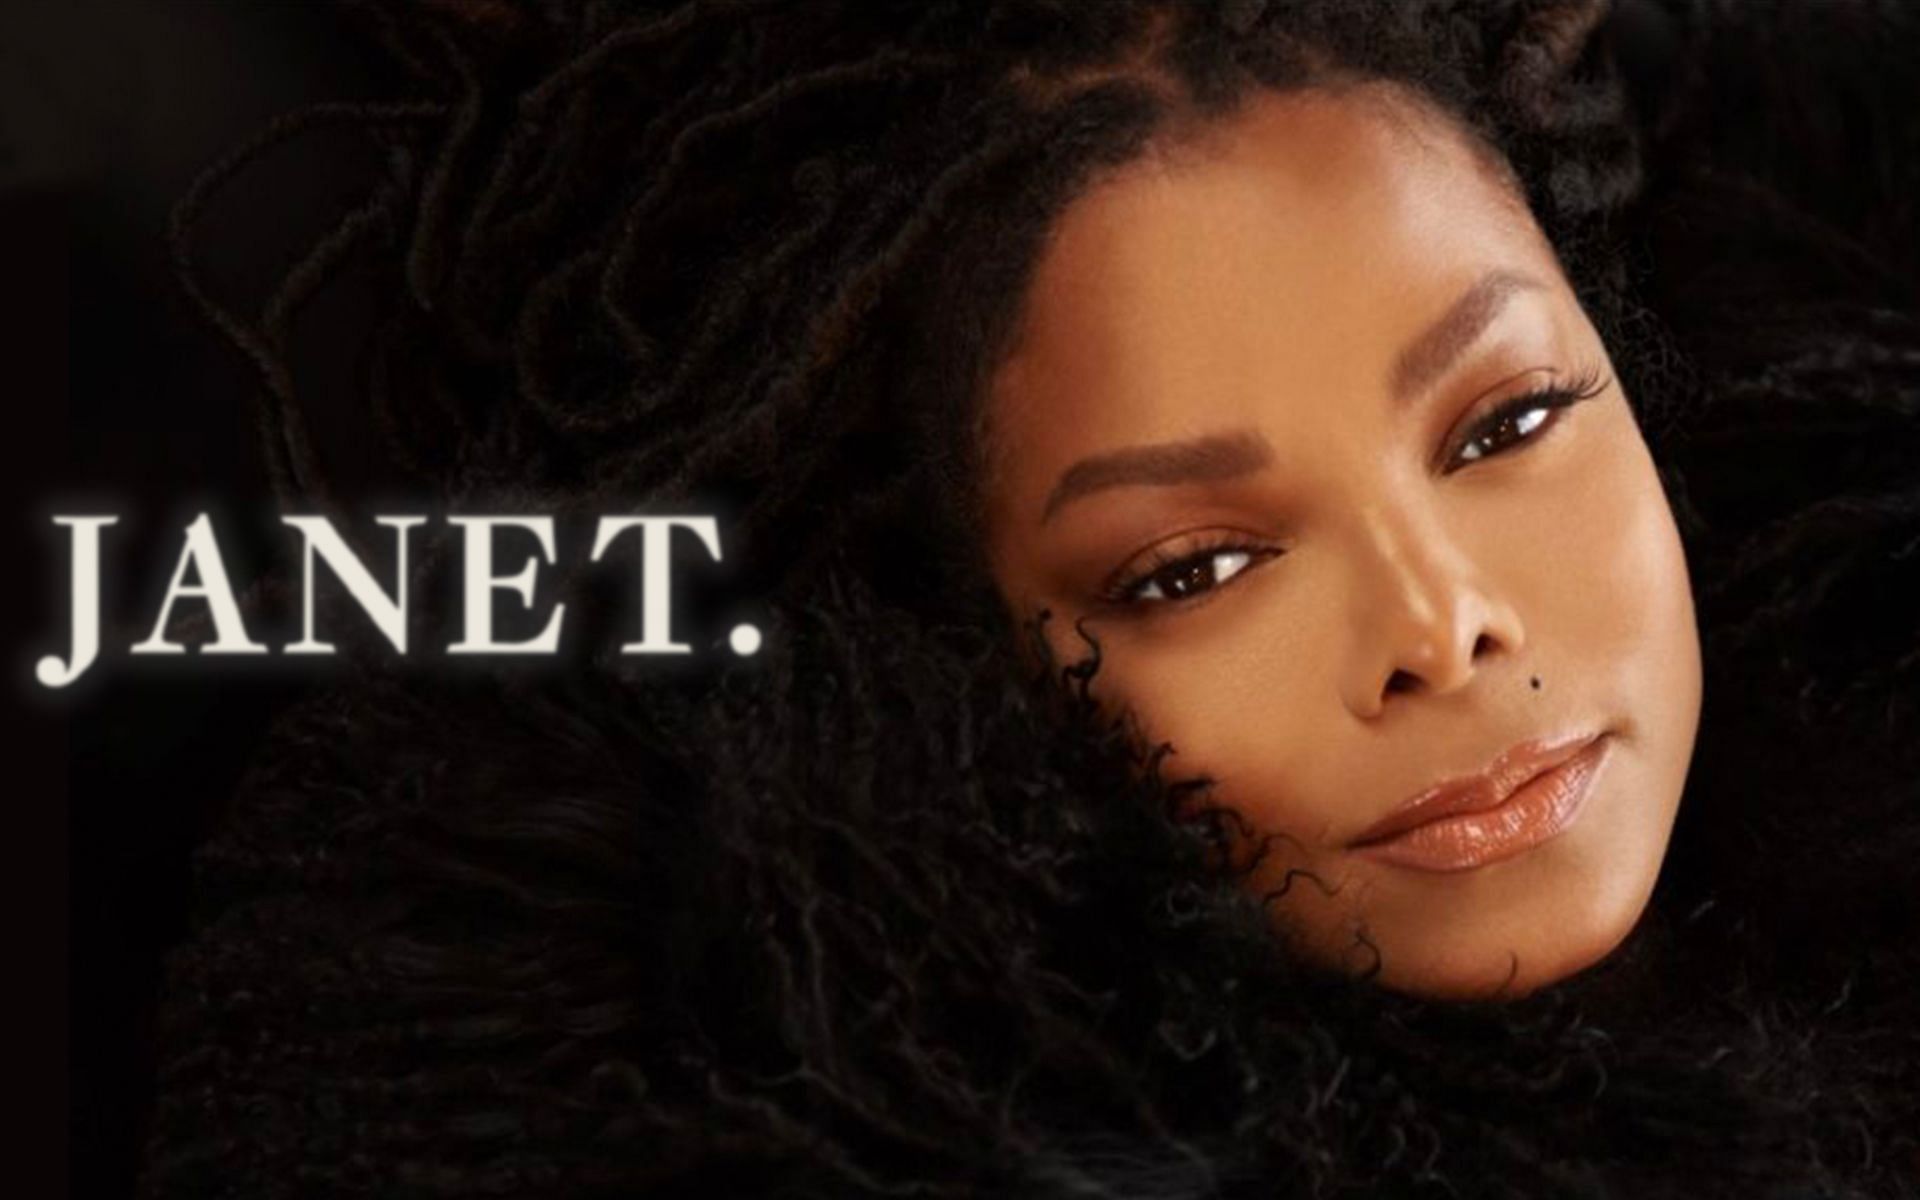 Janet Jackson documentary all set to release on January 28, 2022 (image via Instagram/janetjackson)